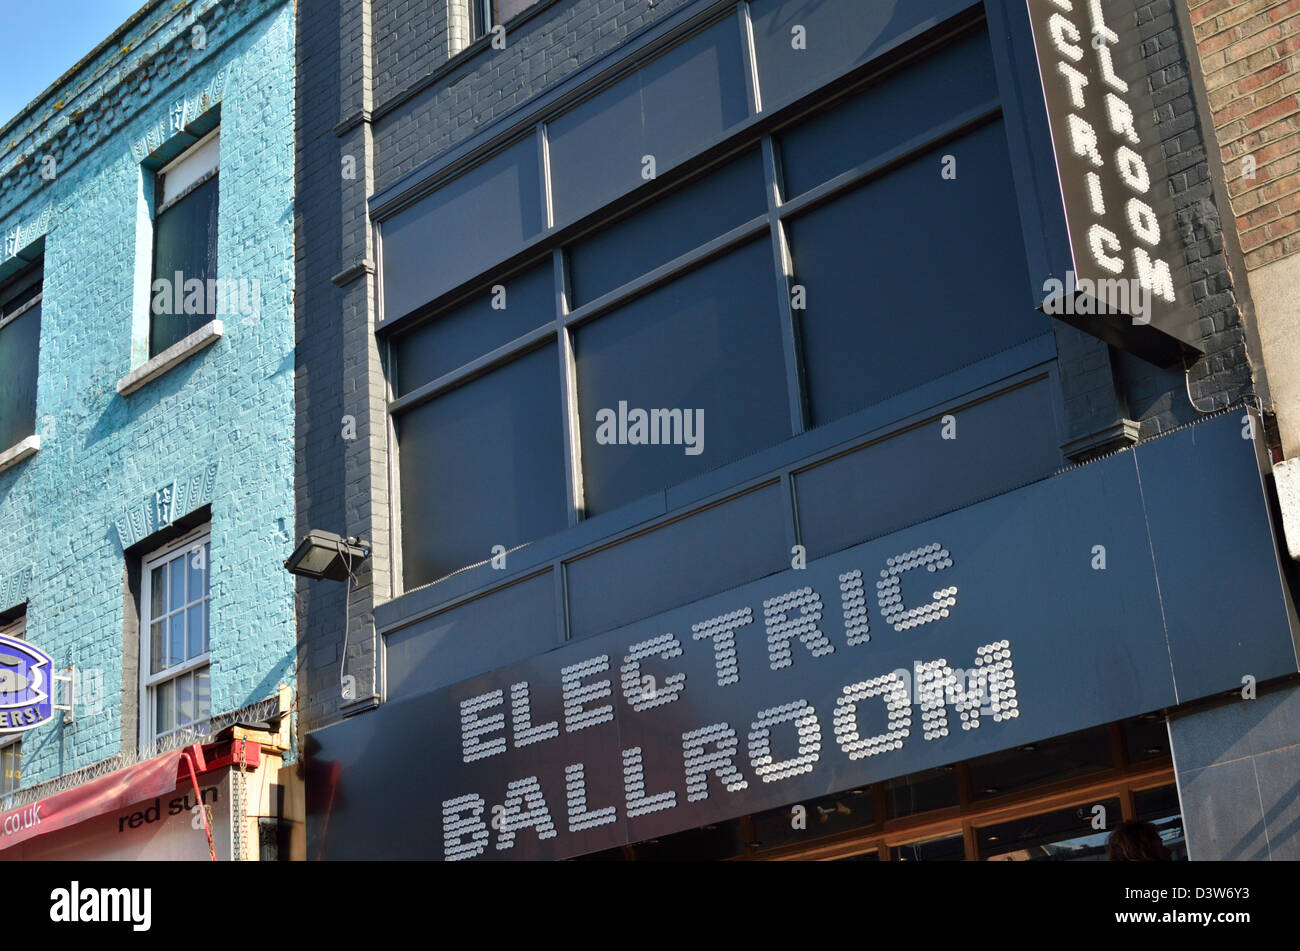 The Electric Ballroom music venue in Camden Town, London, UK Stock Photo